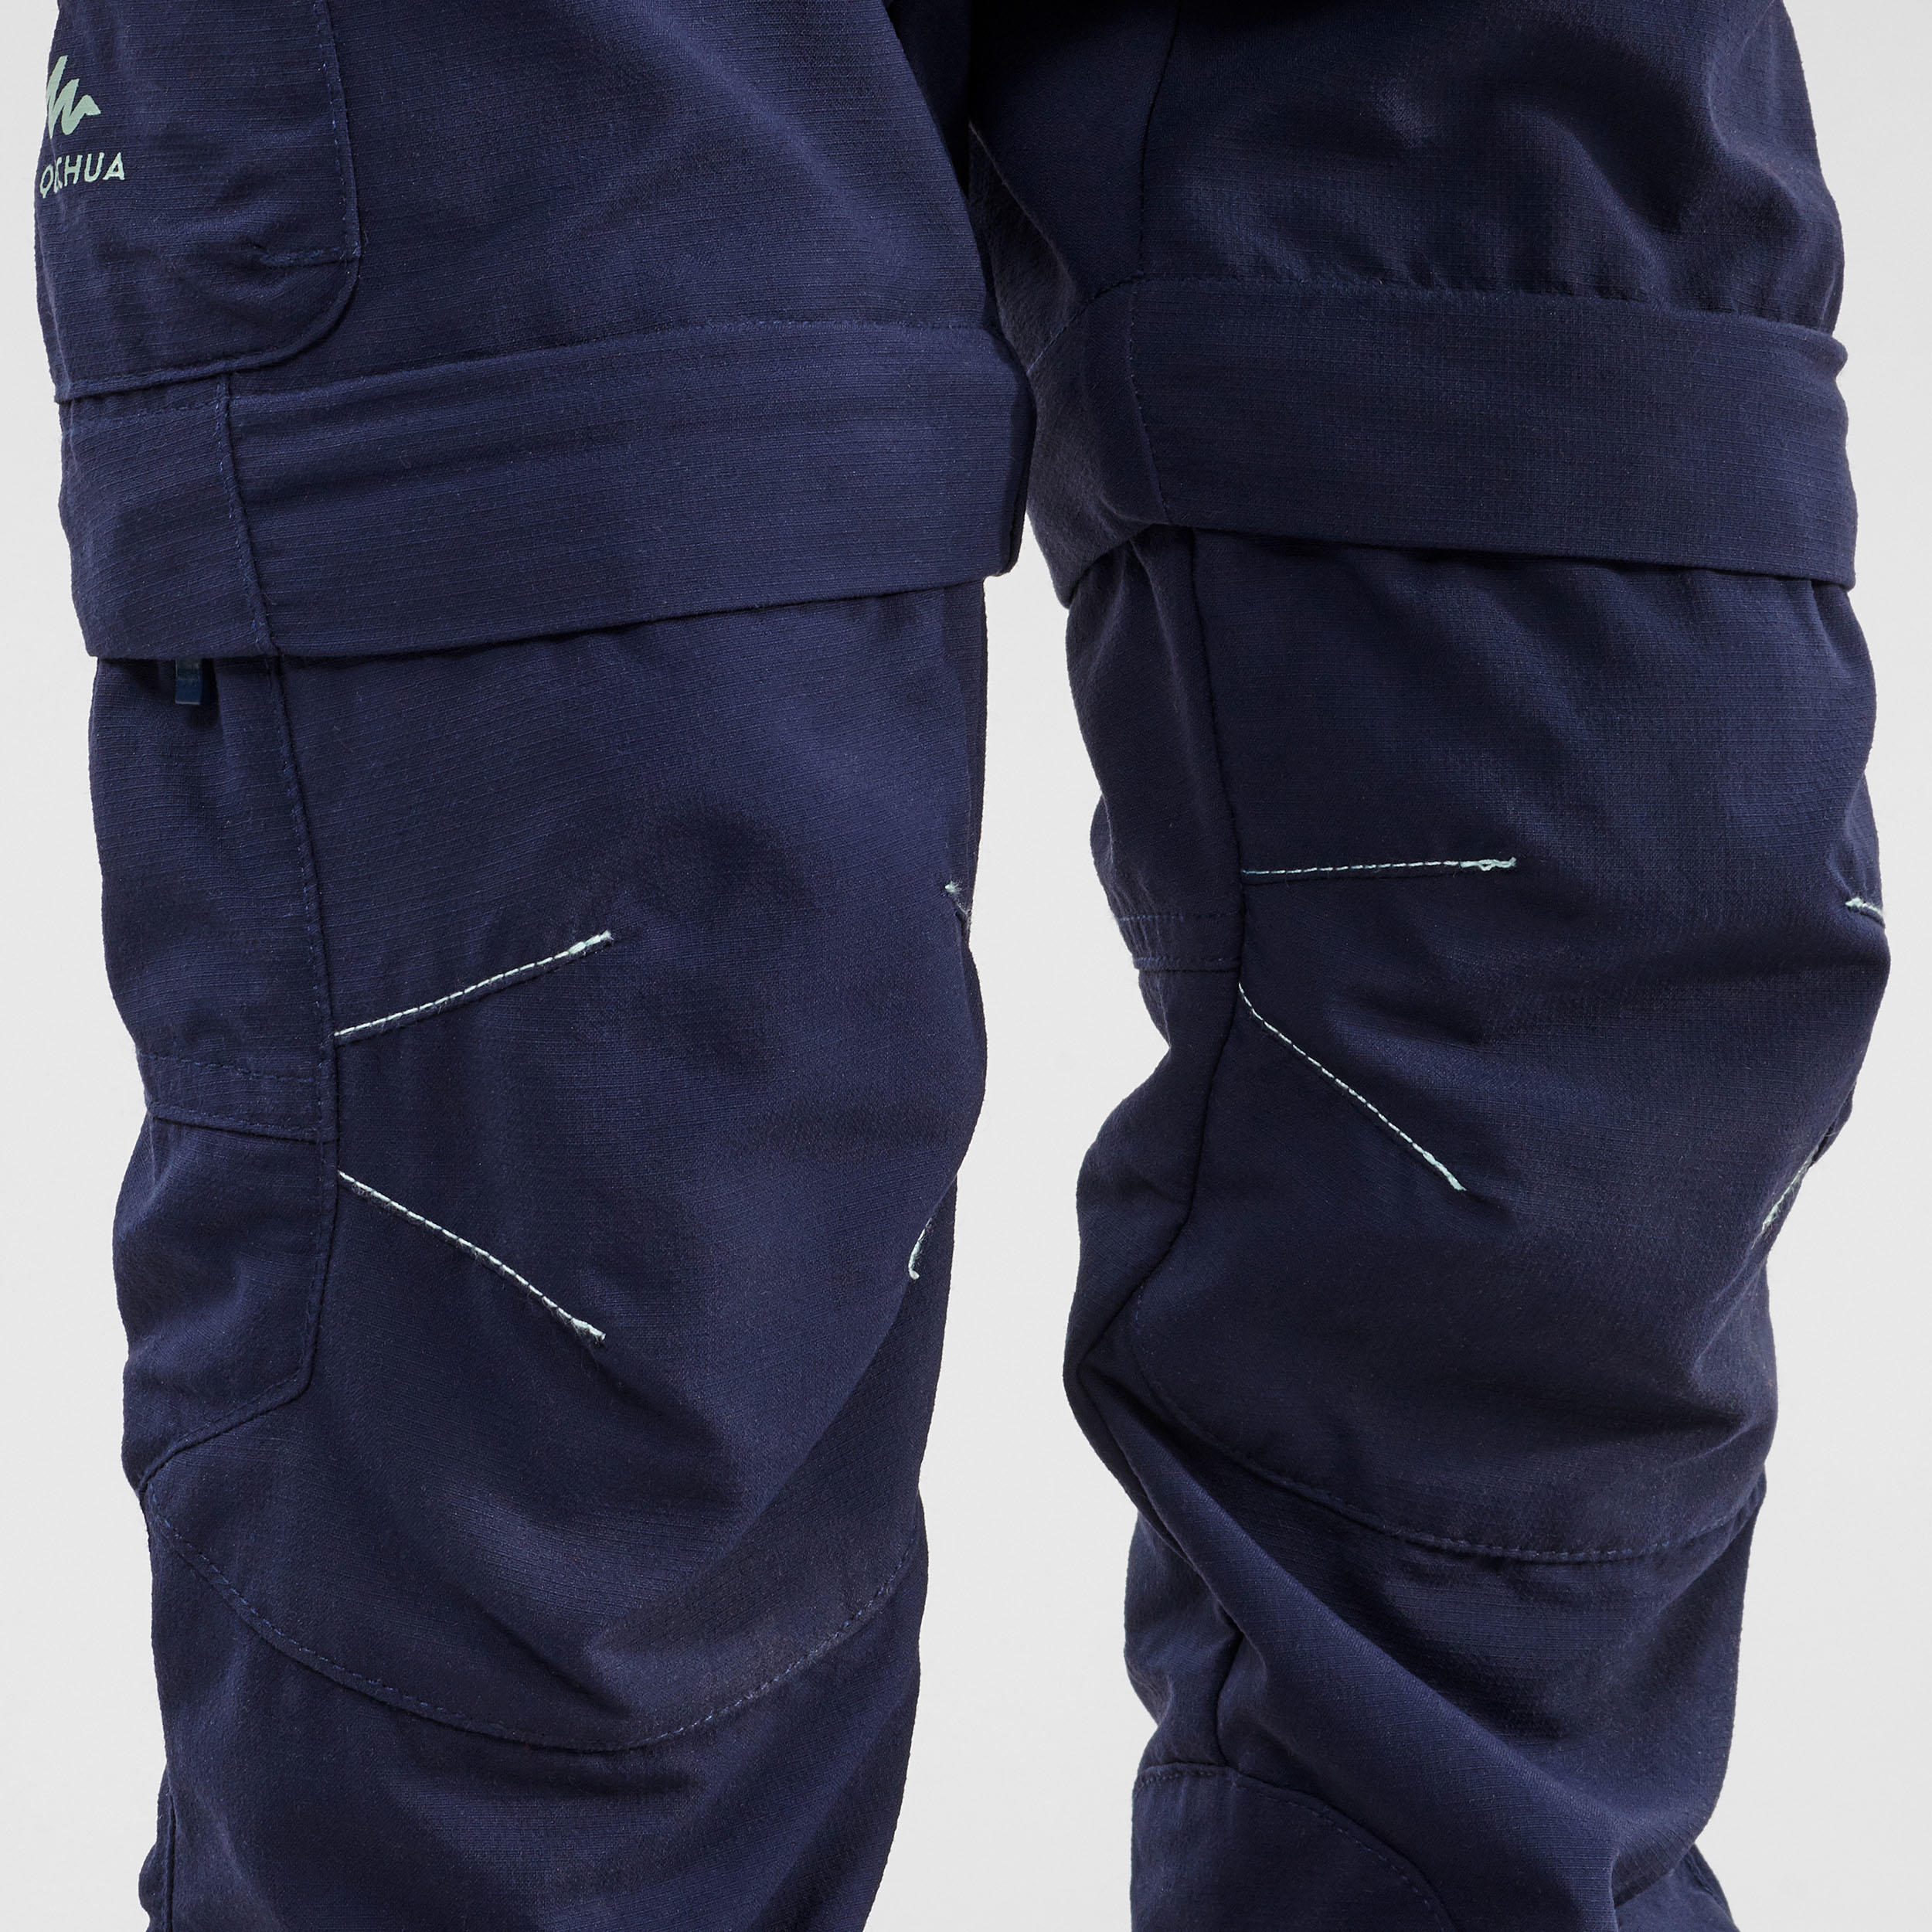 Children's Modular hiking trousers - MH500 KID blue - 2-6 years 10/10